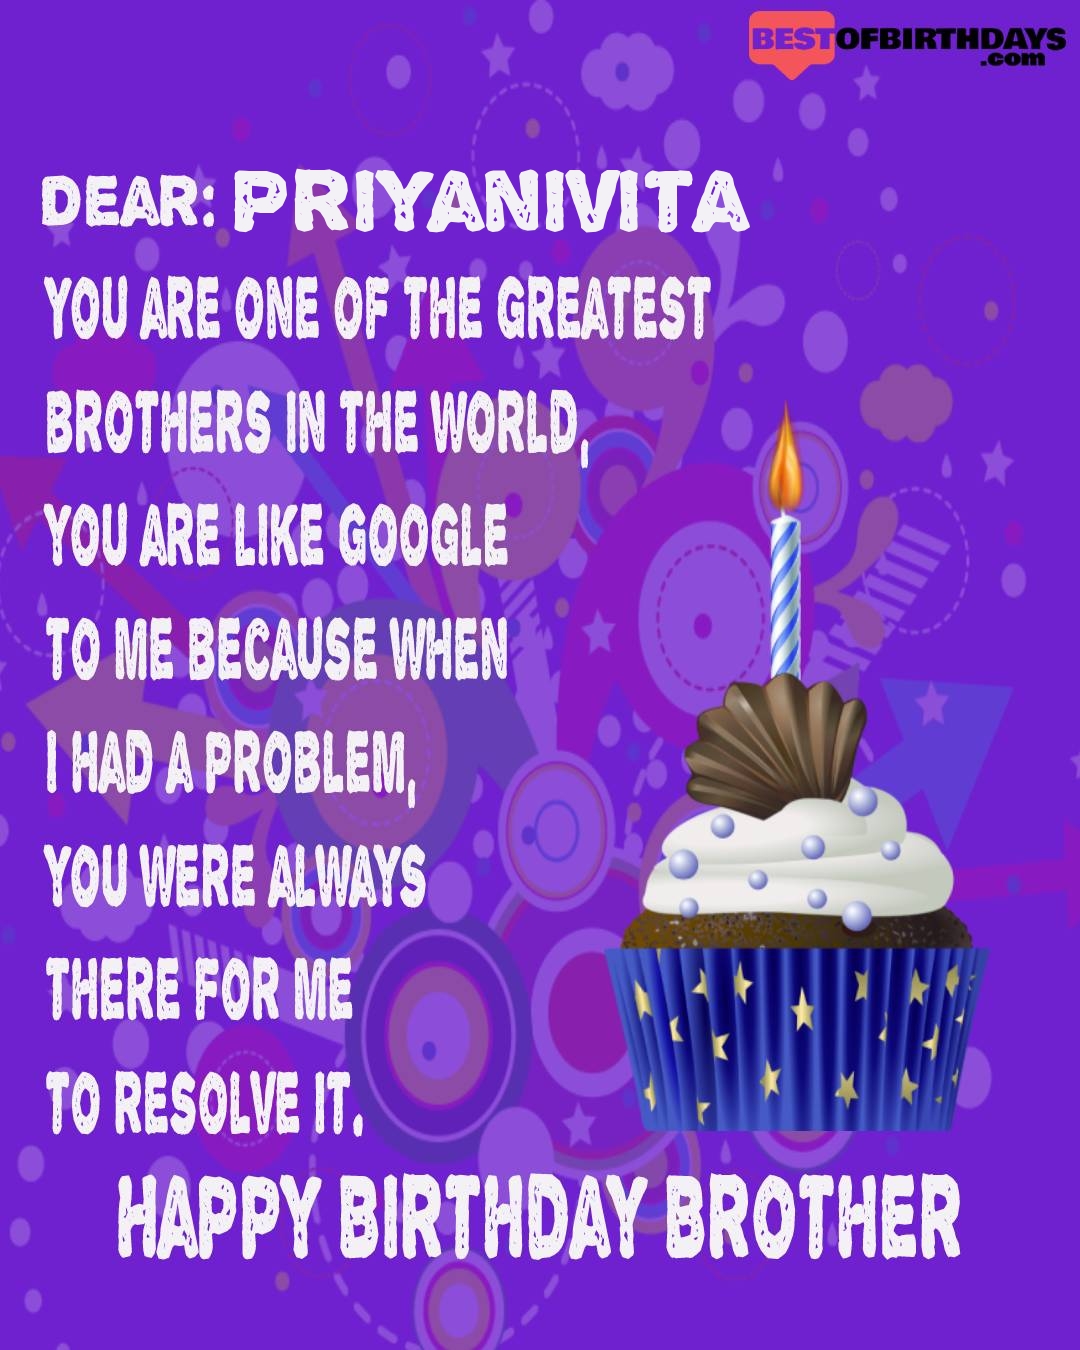 Happy birthday priyanivita bhai brother bro